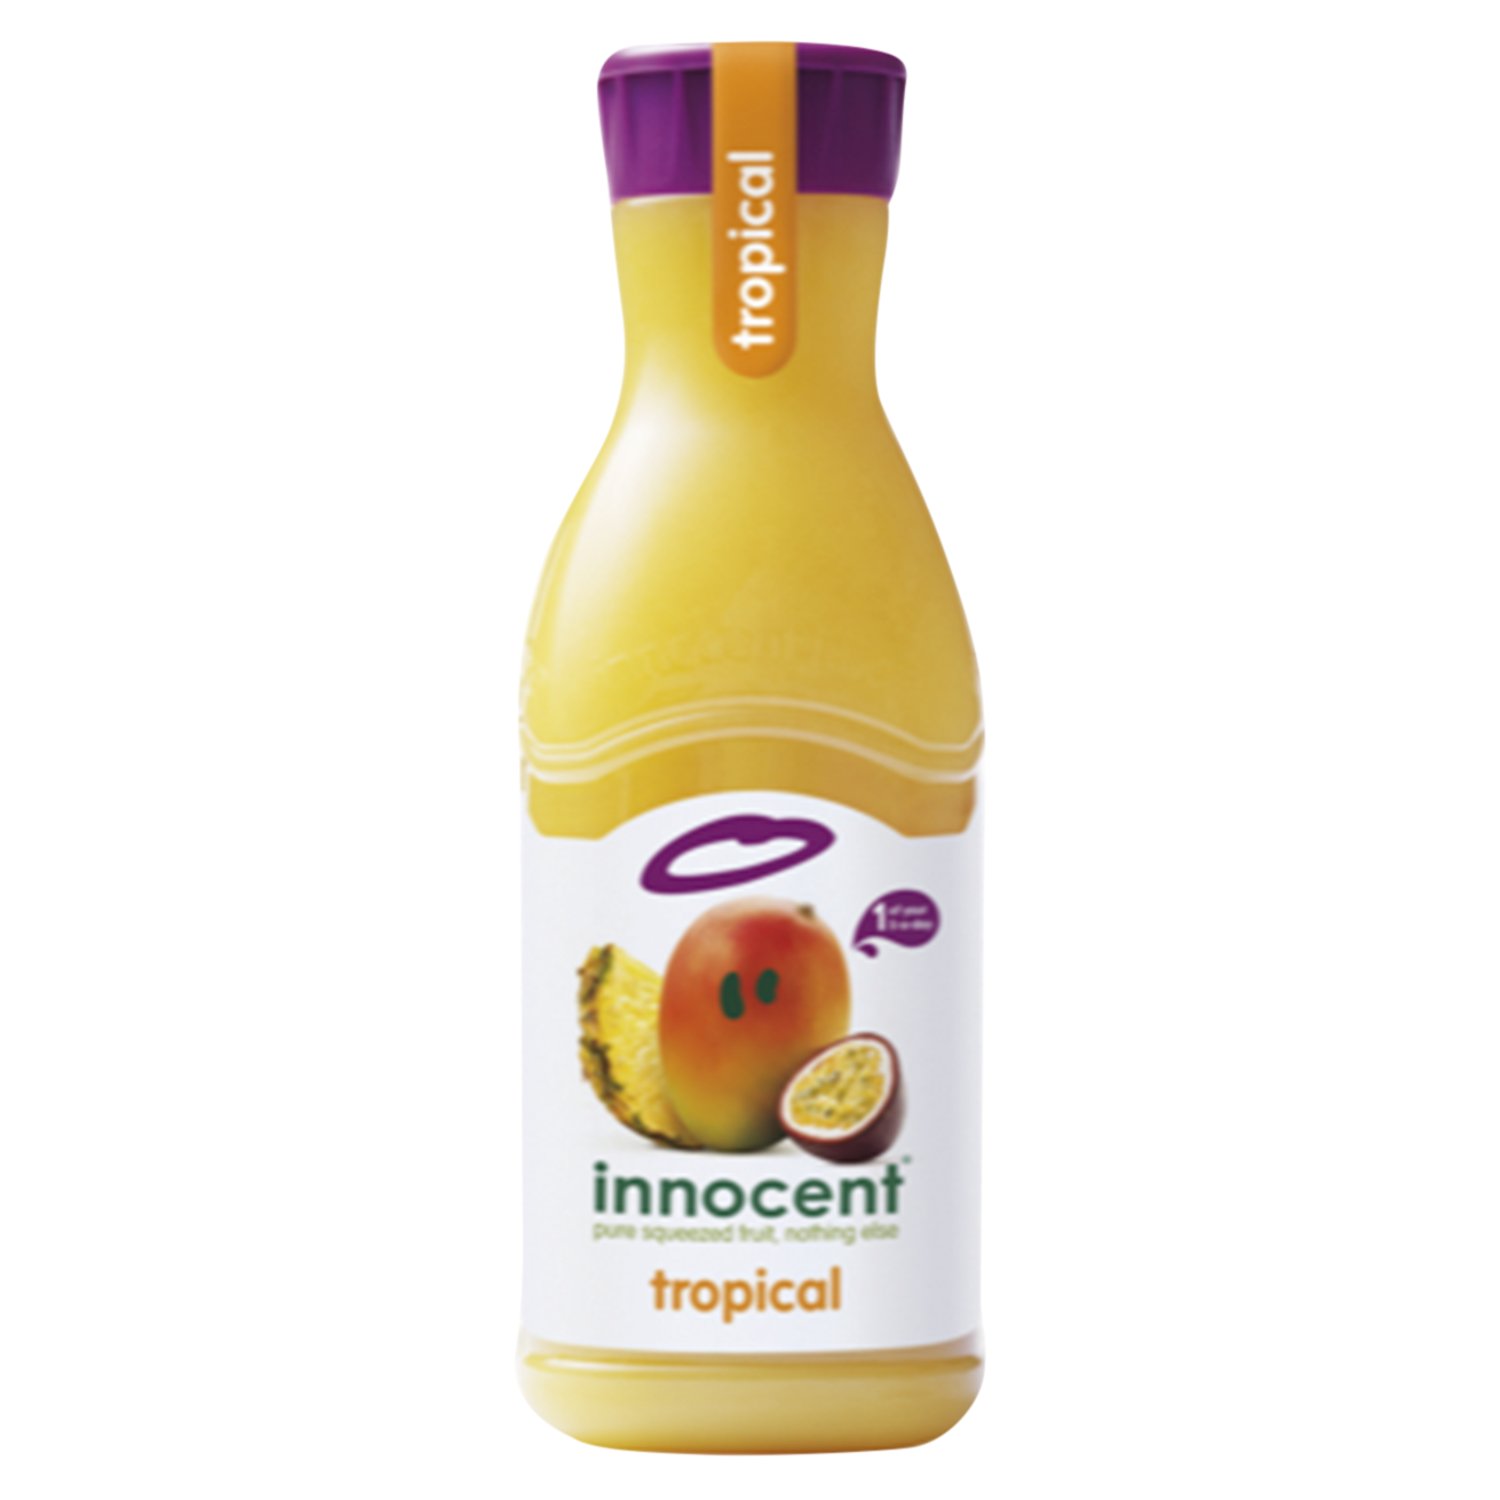 Innocent Tropical Juice (900 ml)